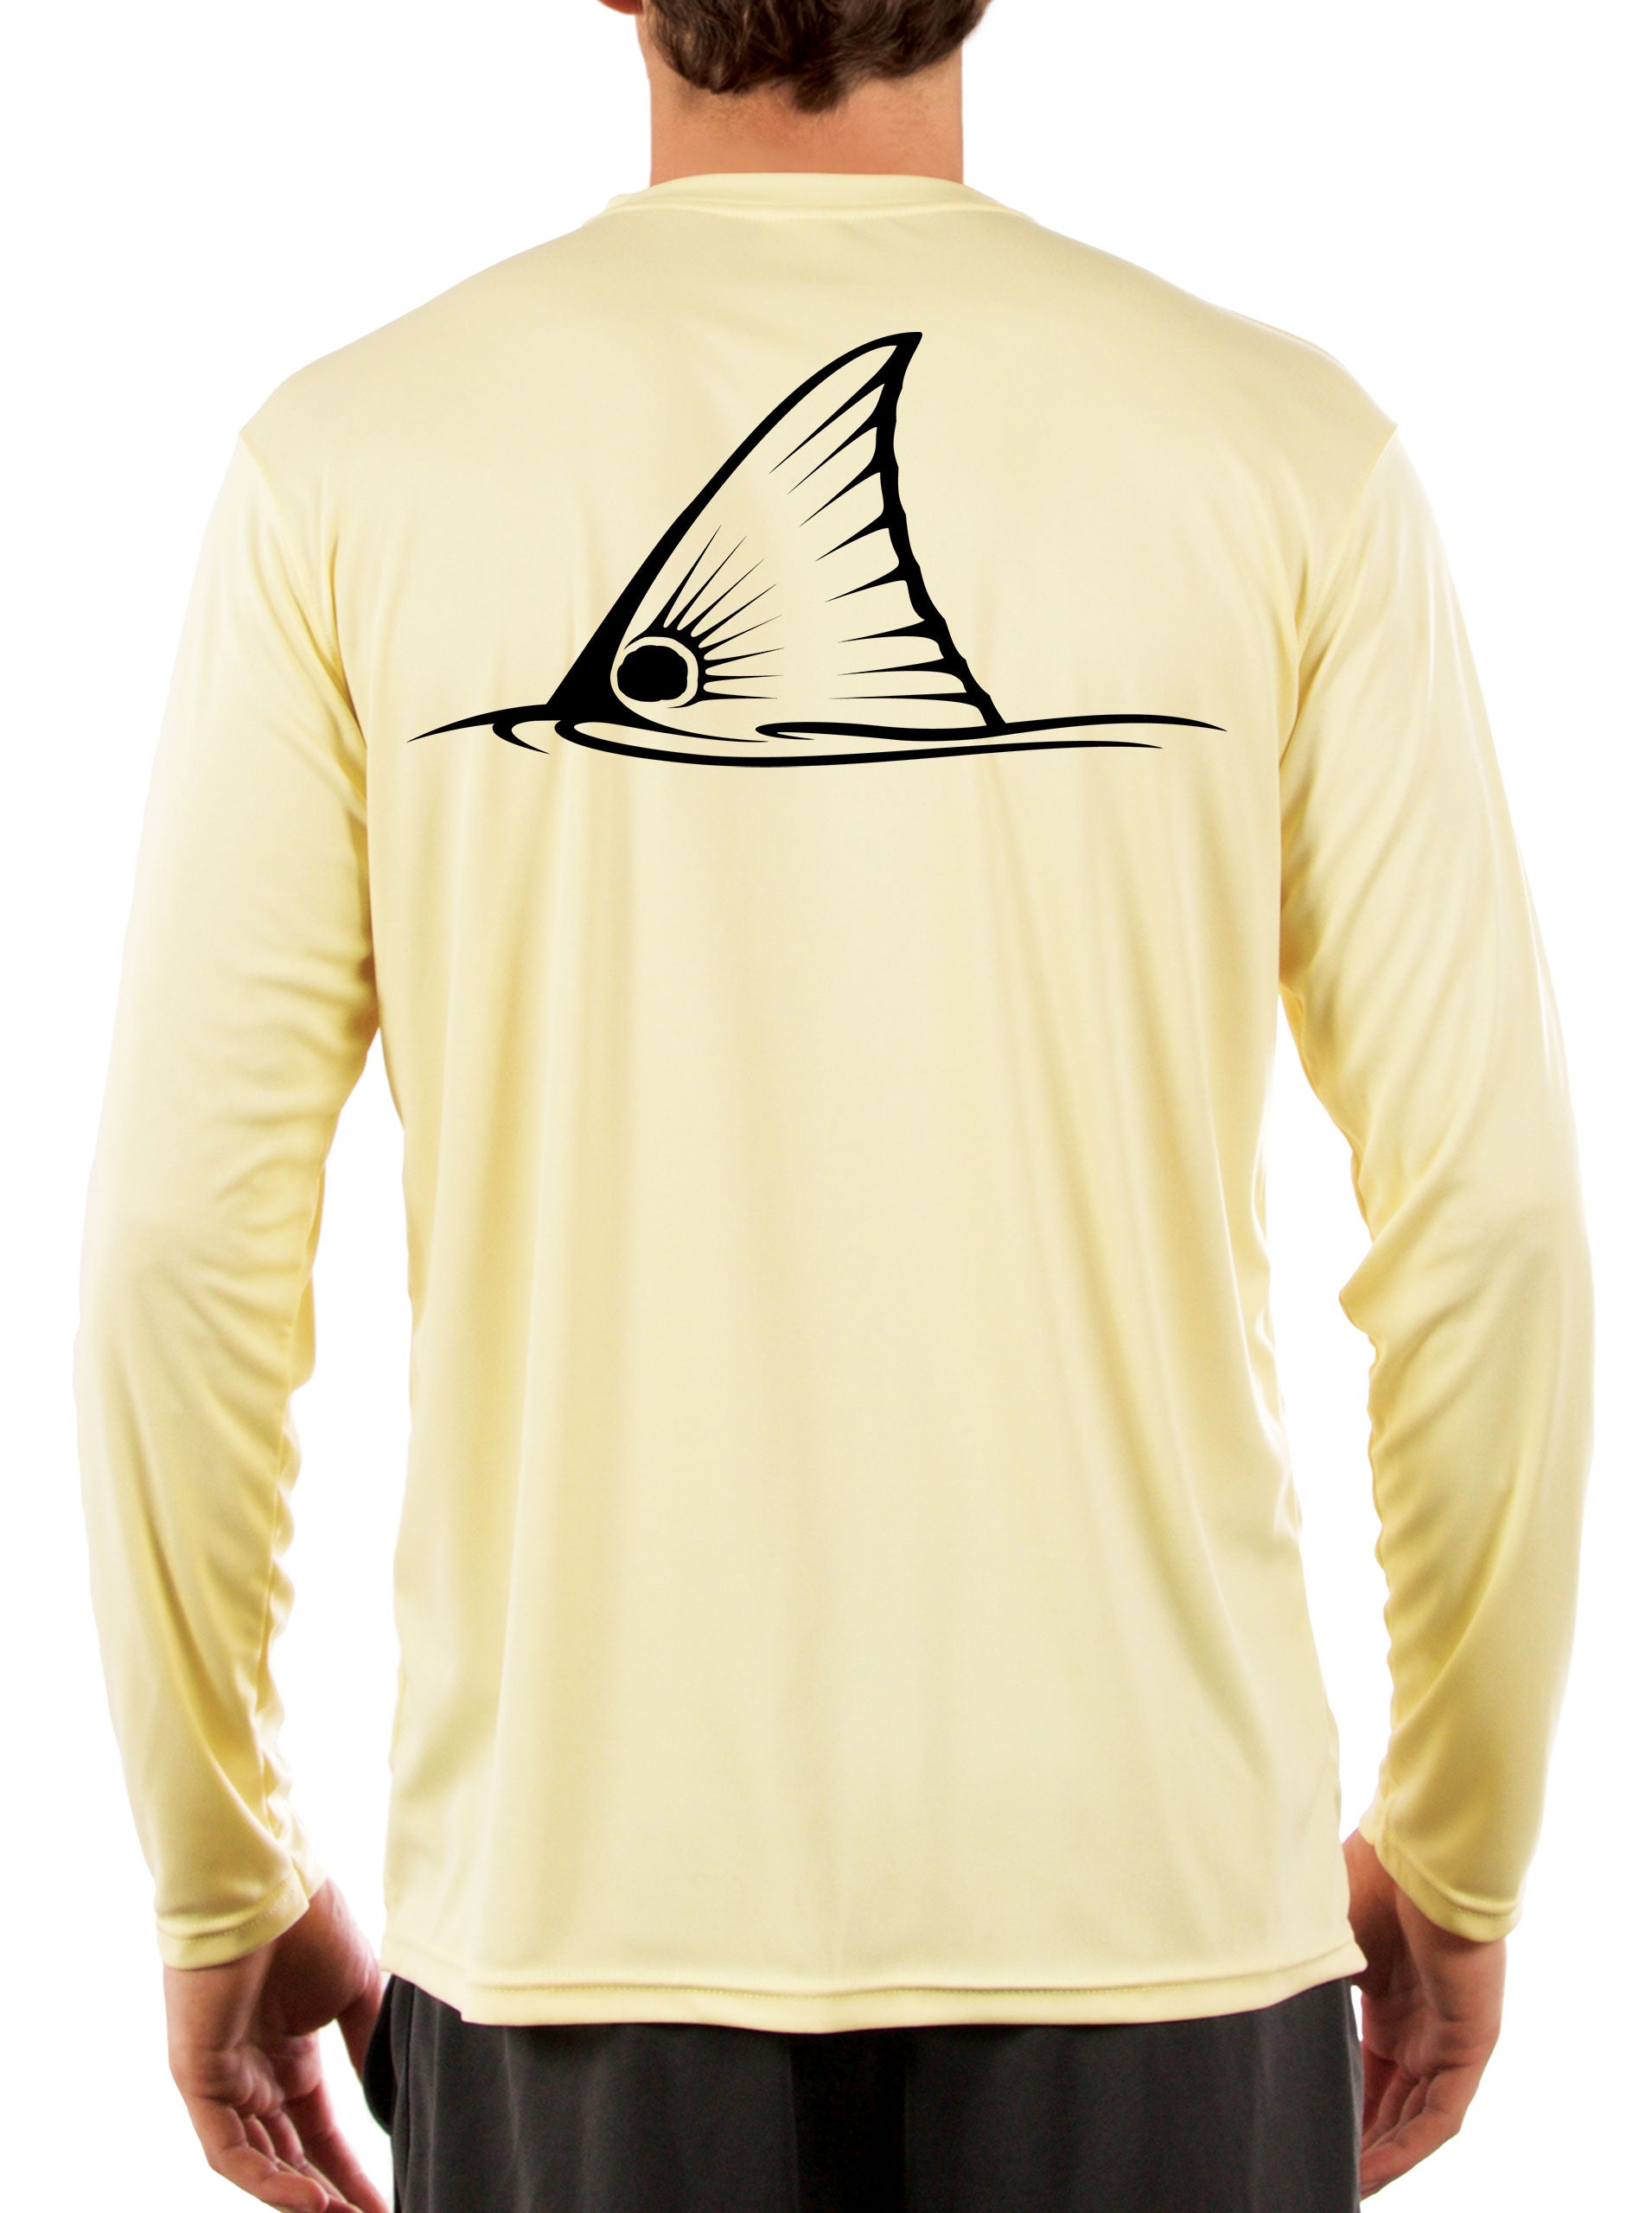 Redfish Fishing Shirt, Red Drum Camo Performance Shirts, 50+ SPF Fishing Shirt, UV Sun Protection Shirt, Men's Redfish Fishing Shirt